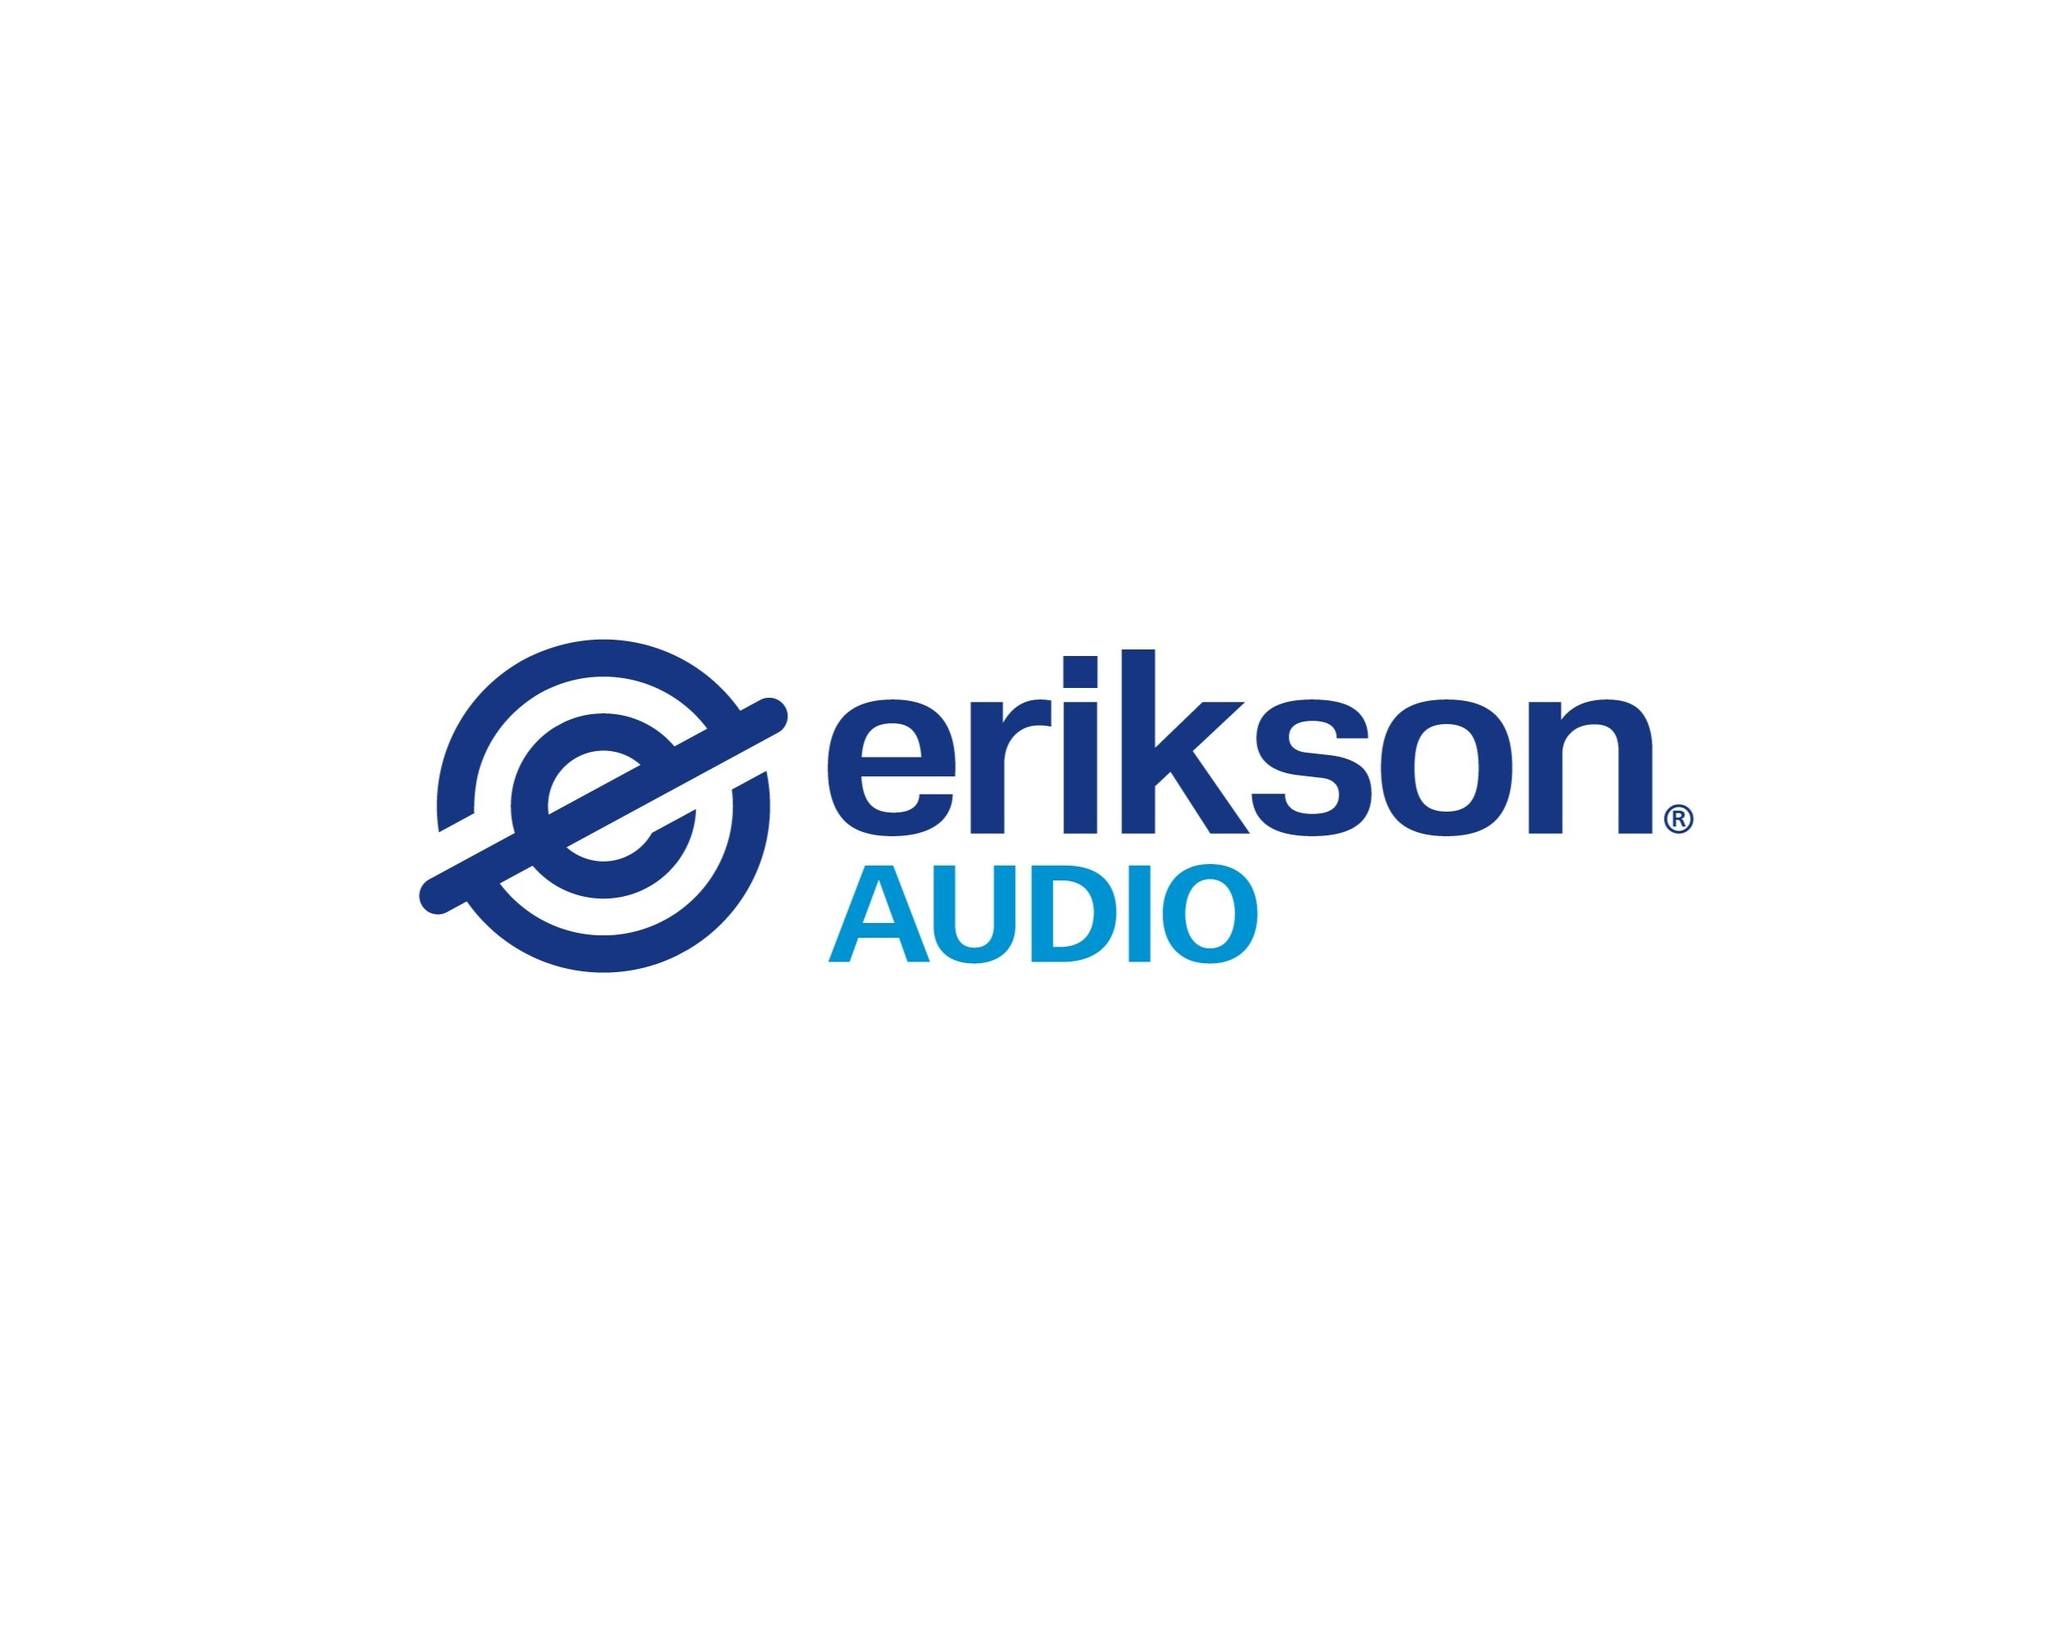 New exclusive distribution partenership in Canada - Erikson Audio an Exertis | JAM Business